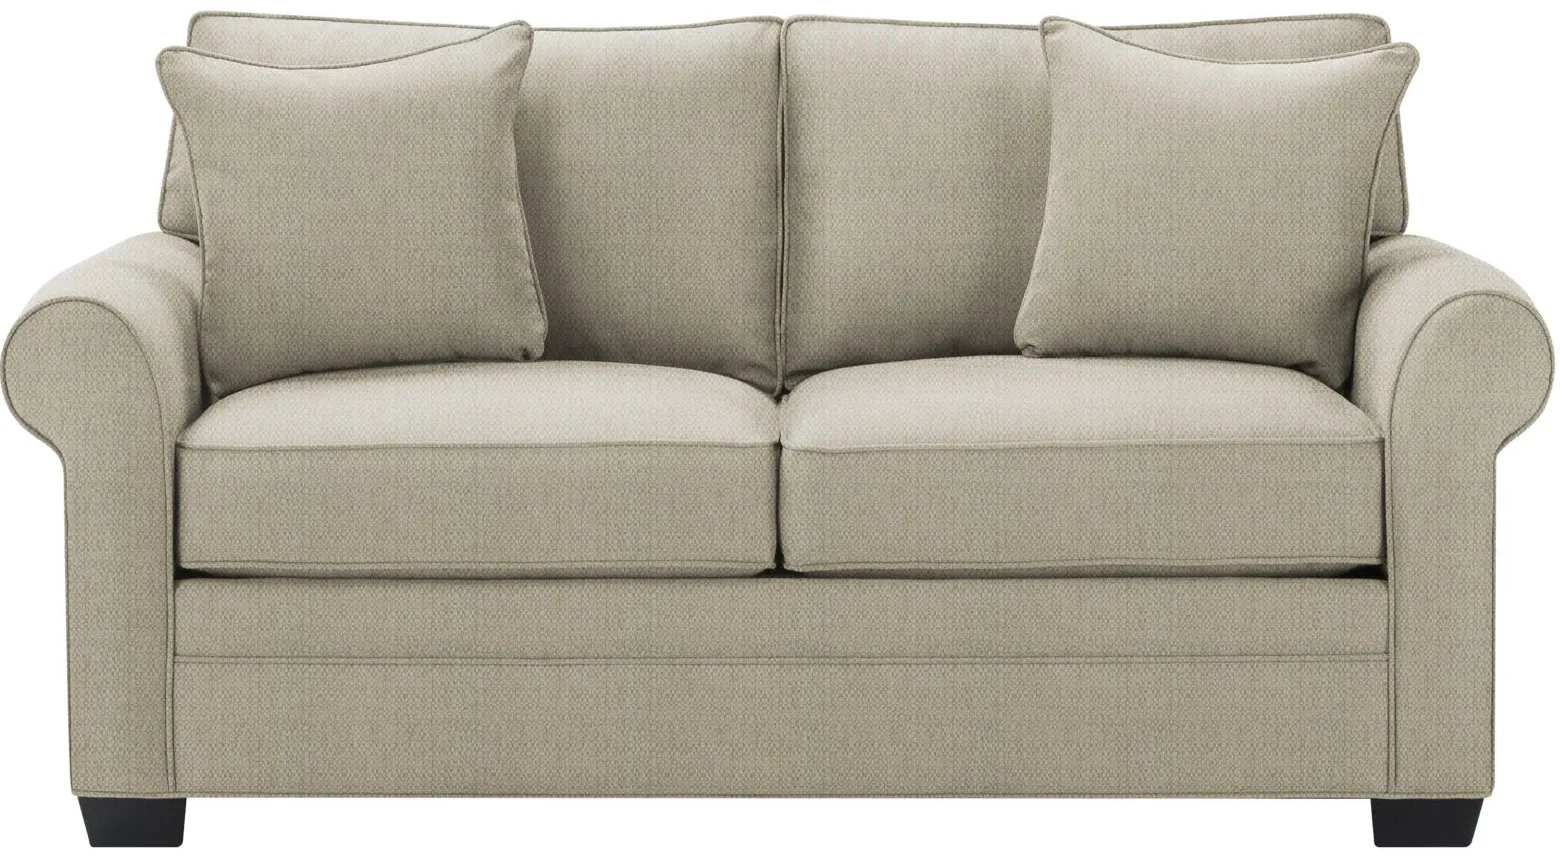 Glendora Full Sleeper Sofa in Sugar Shack Putty by H.M. Richards